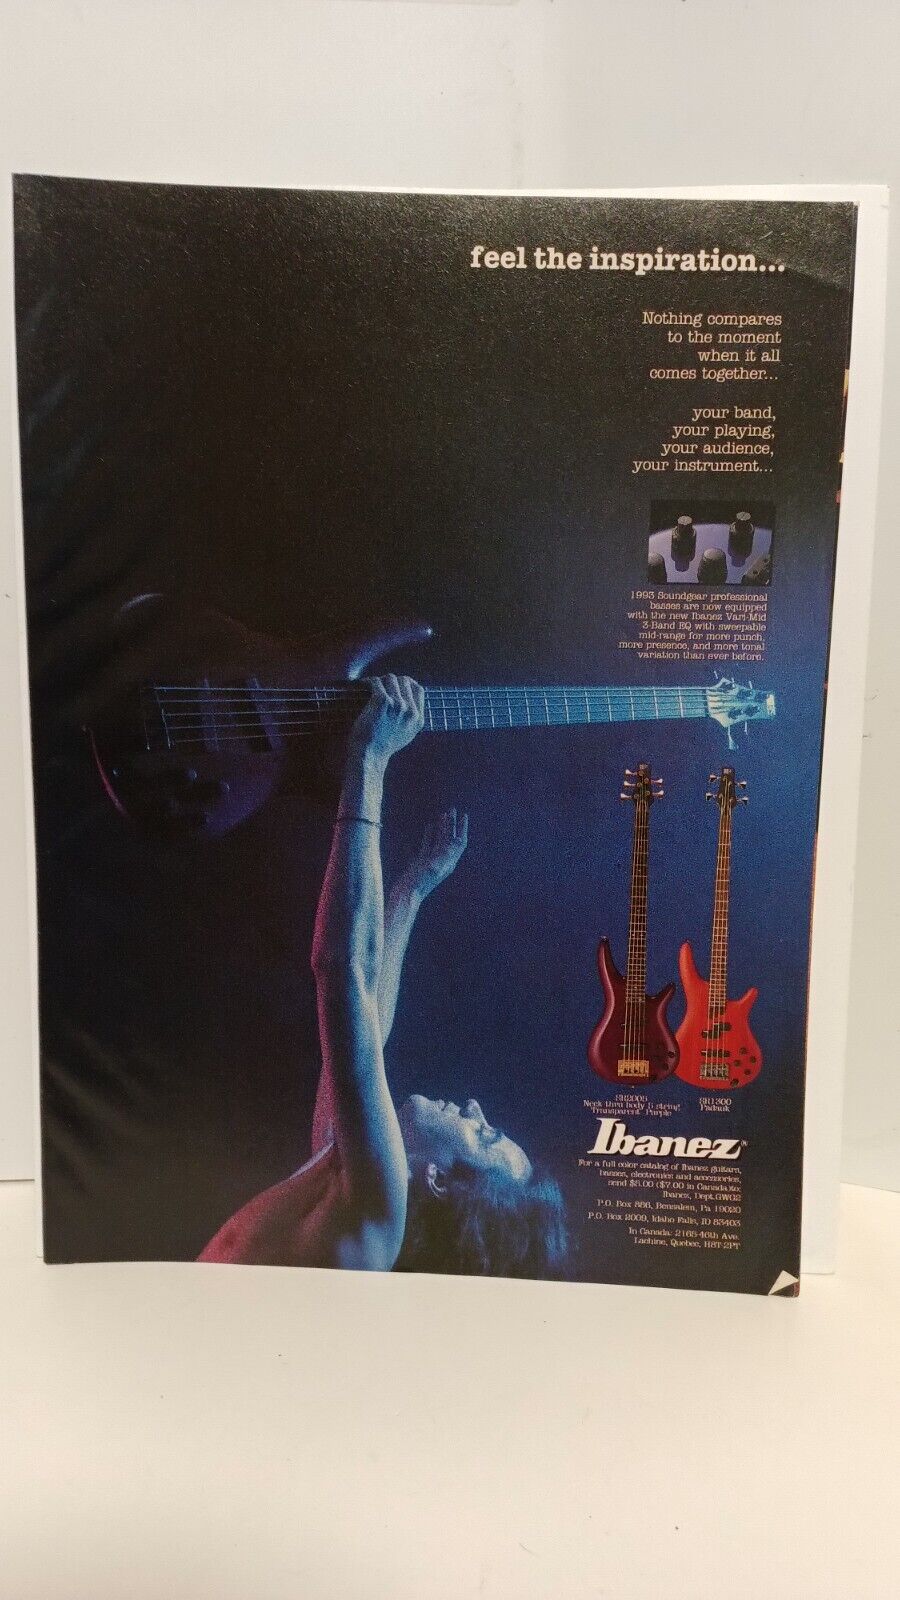 IBANEZ GUITARS SR SERIES BASS GUITAR  1993 - 10X8 - PRINT AD t5